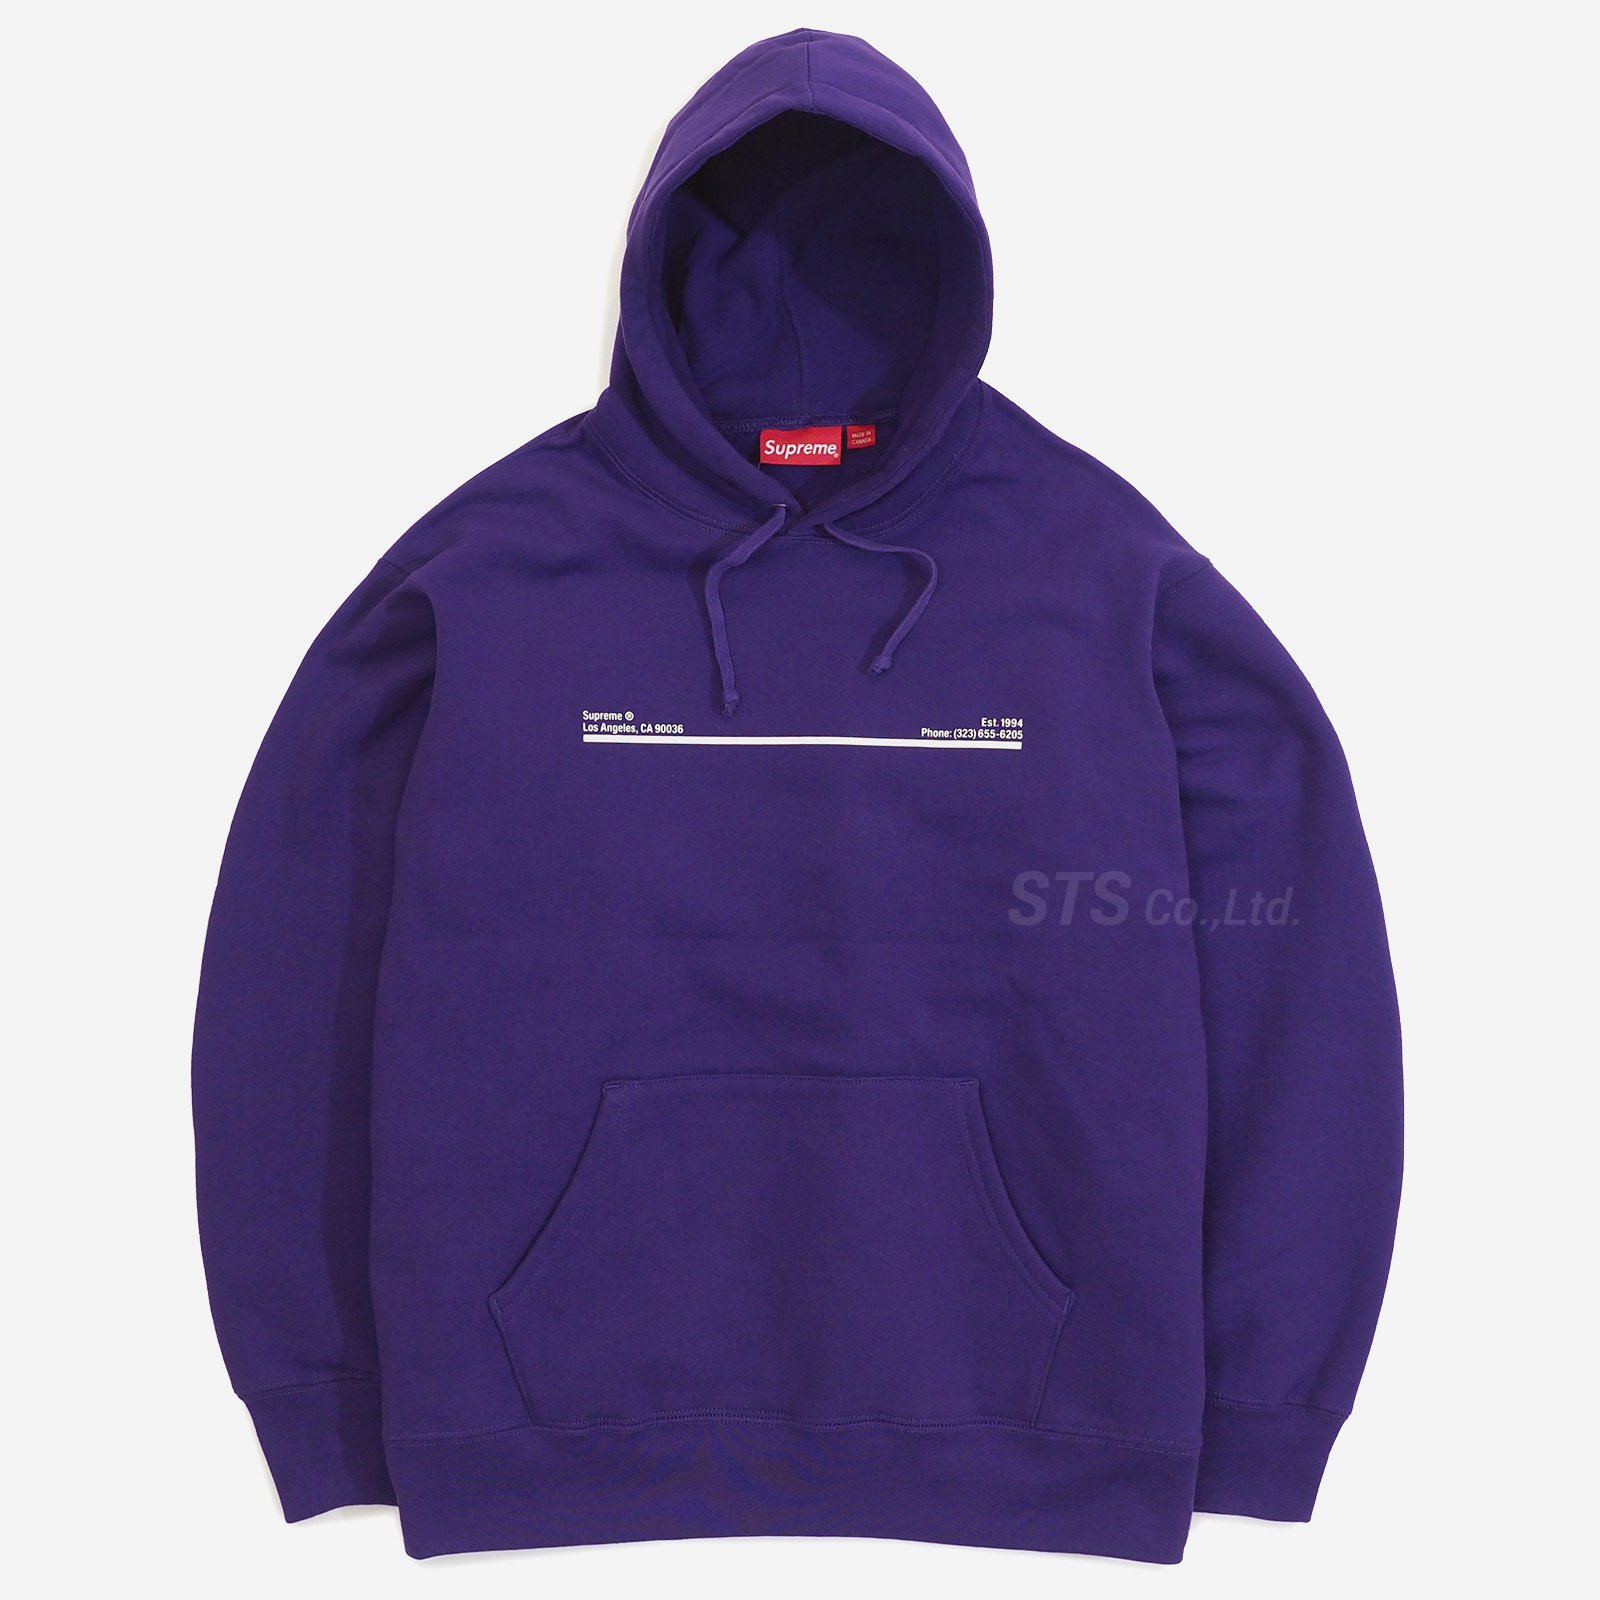 Supreme Shop Hooded SweatshirtNatu